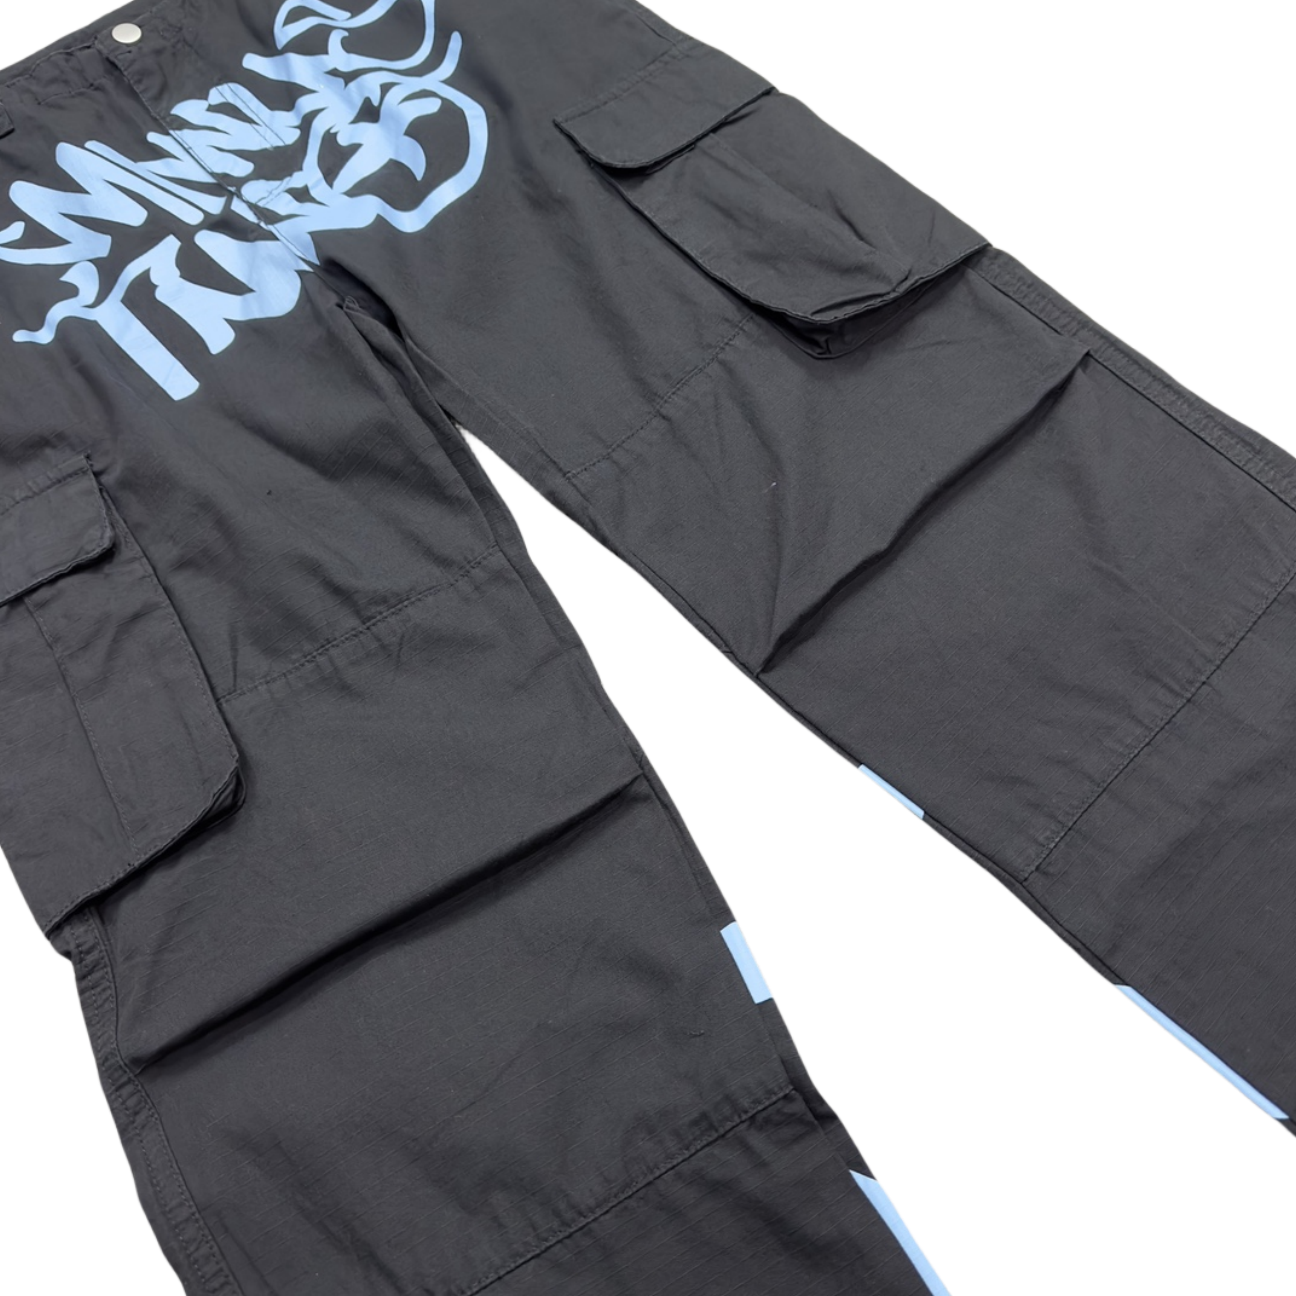 Minus Two Pantalon Cargo Y2K Streetwear Salopette Jeans Long Joggers Pantalon Femme Homme - Noir/Bleu